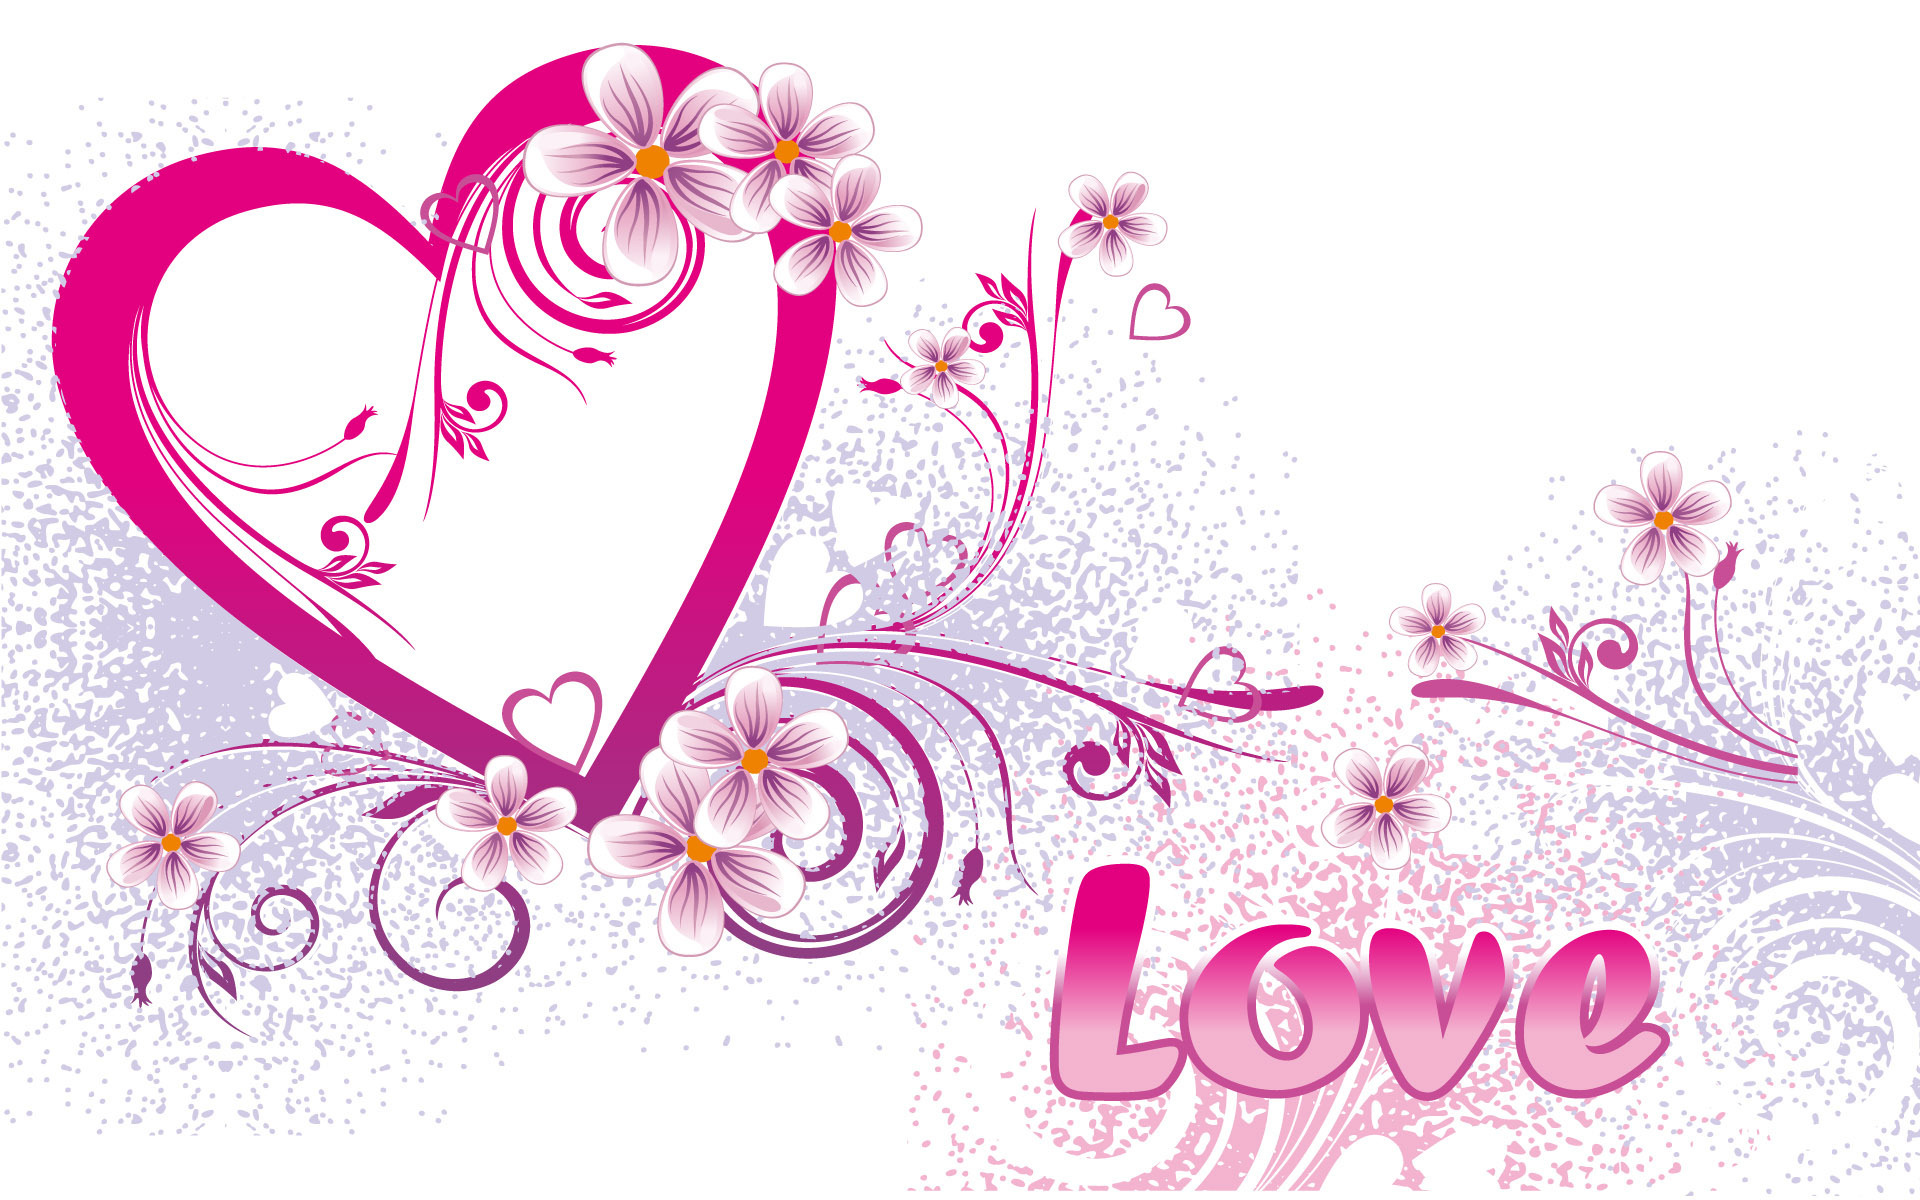 Love-wallpaper-love-4187632-1920-1200 | danielsipituama